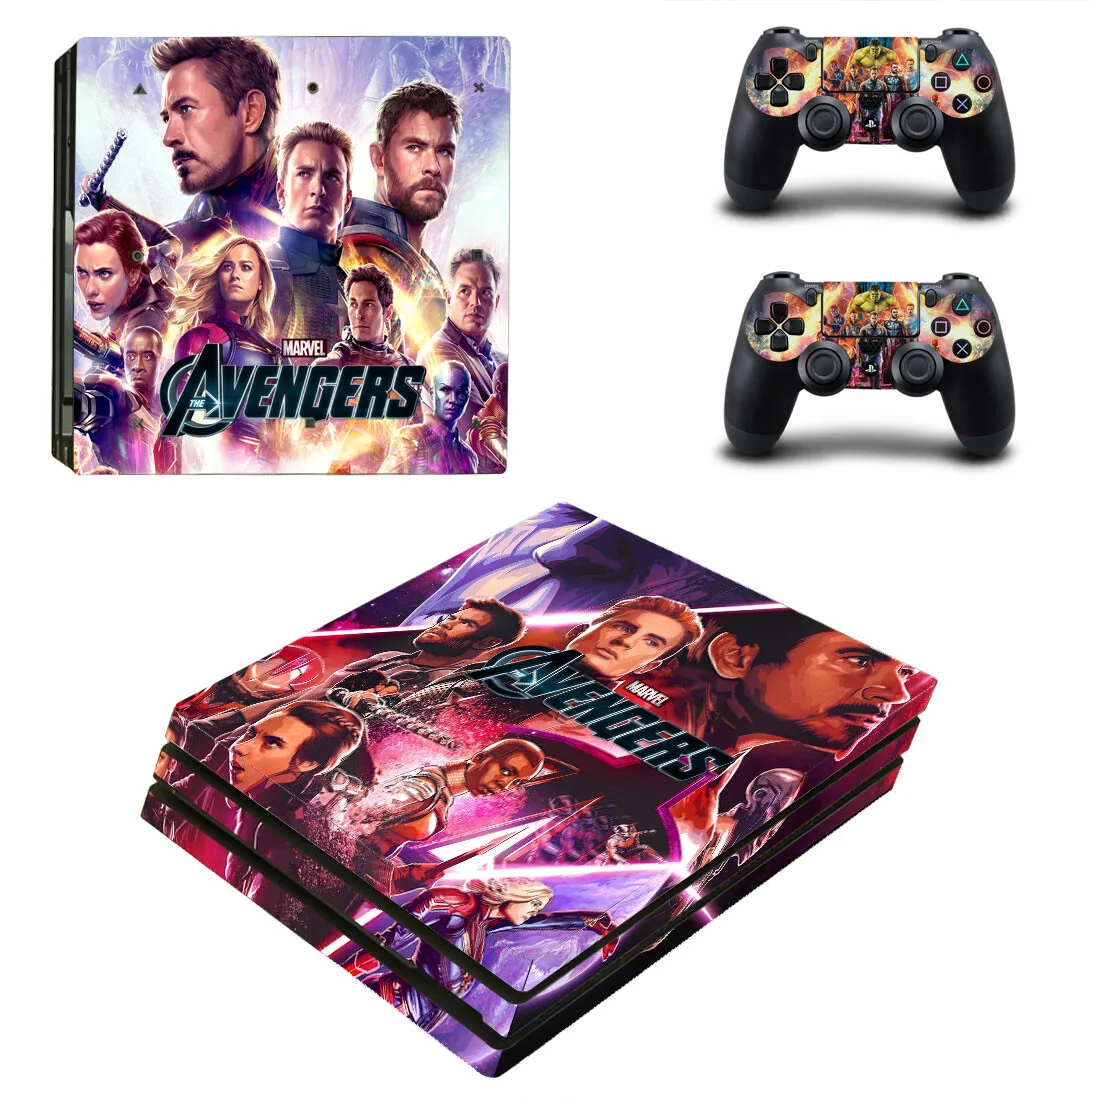 Avengers Cilt Sticker Oyun Konsolu koruyucu film için PS4pro PS4 Pro Konsolu ve 2 Oyun Kontrolörleri PS4 Pro Cilt Sticker . ' - ' . 3